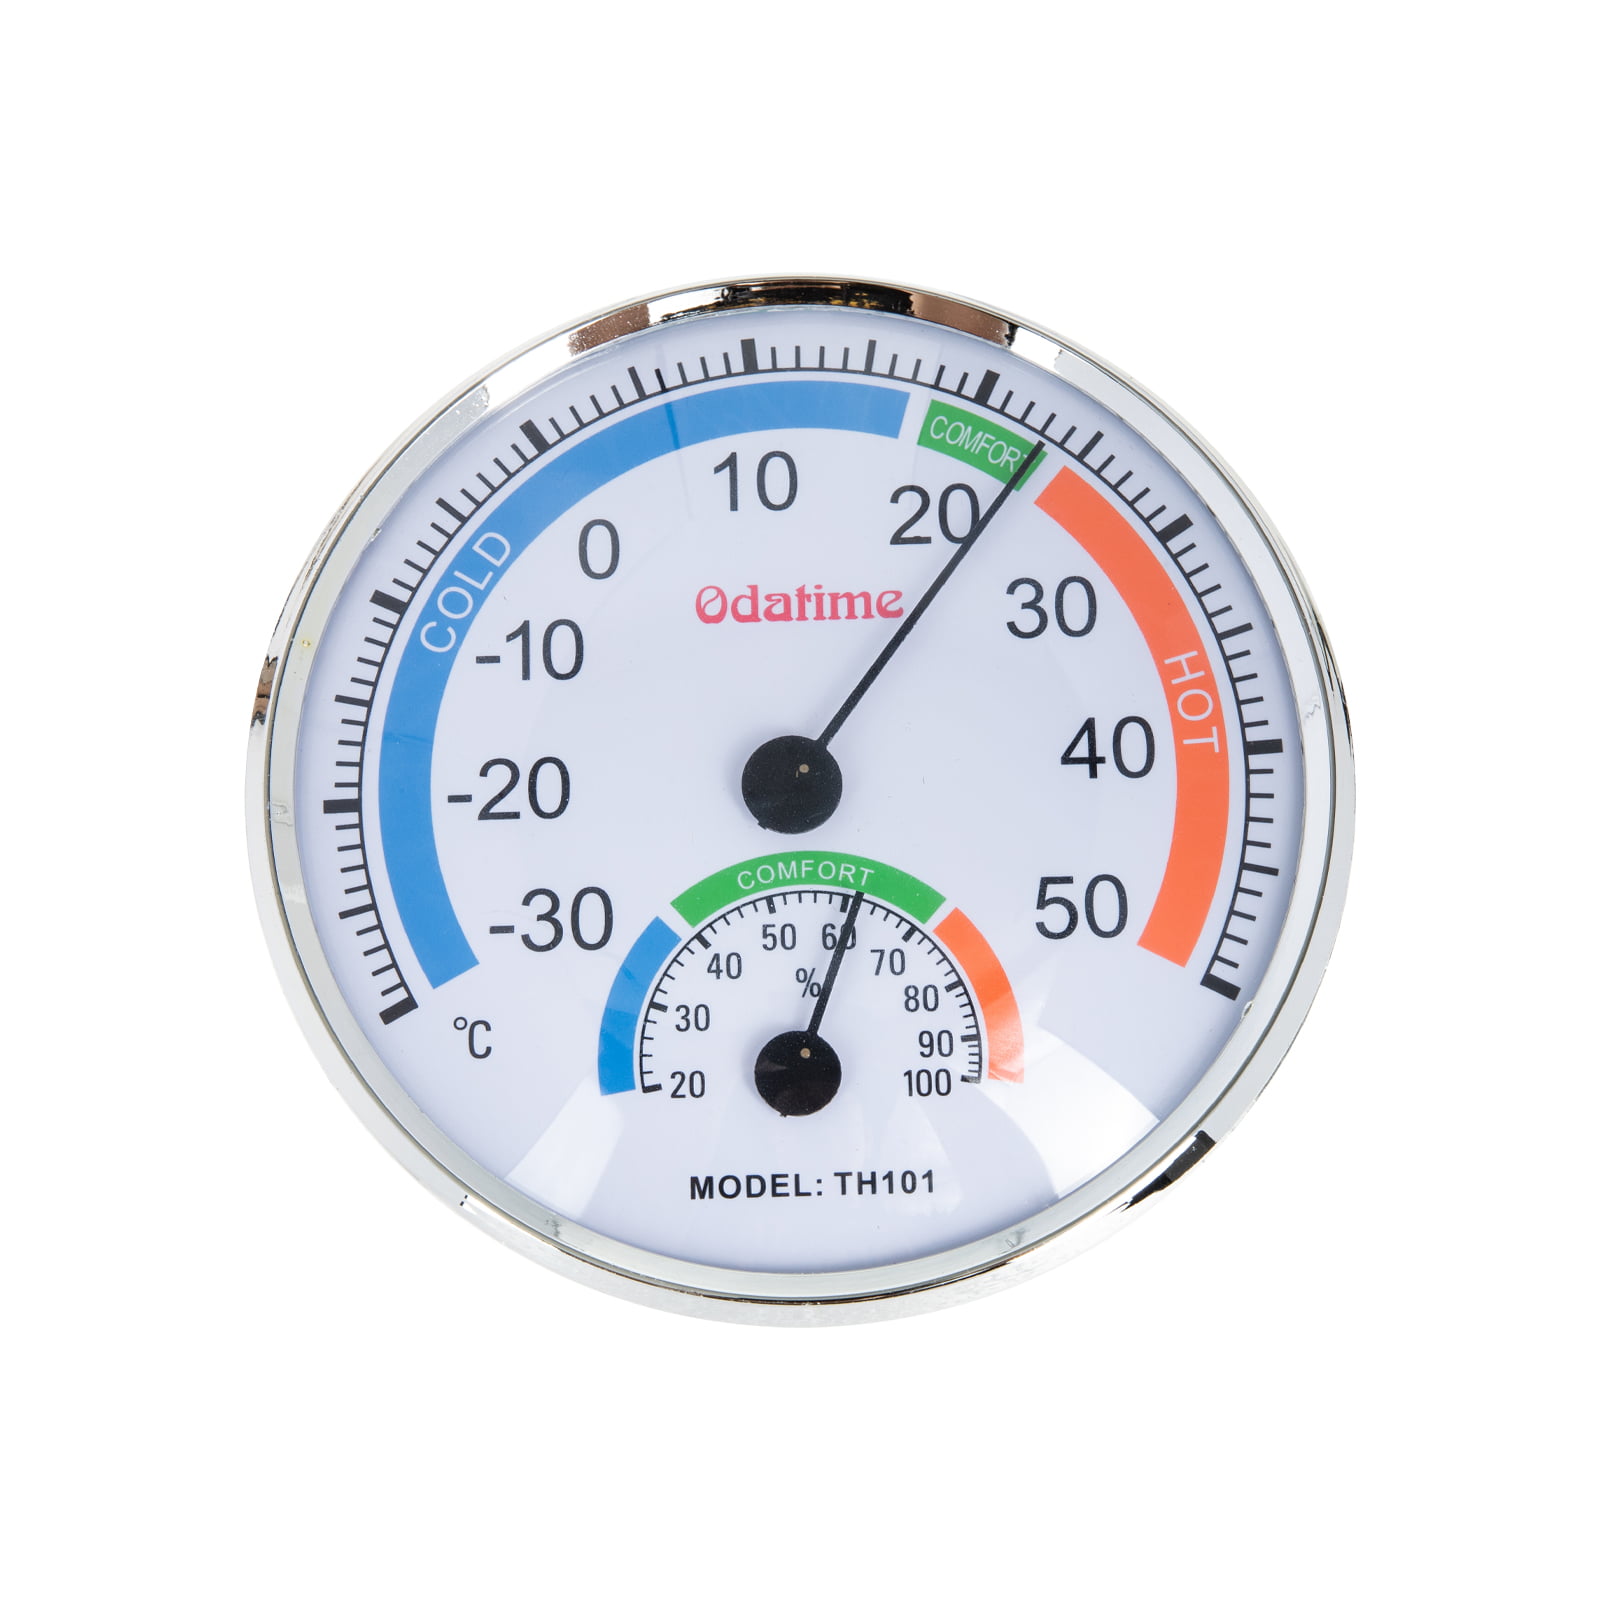  Yardwe Thermometer Outdoor Hygrometer Inside